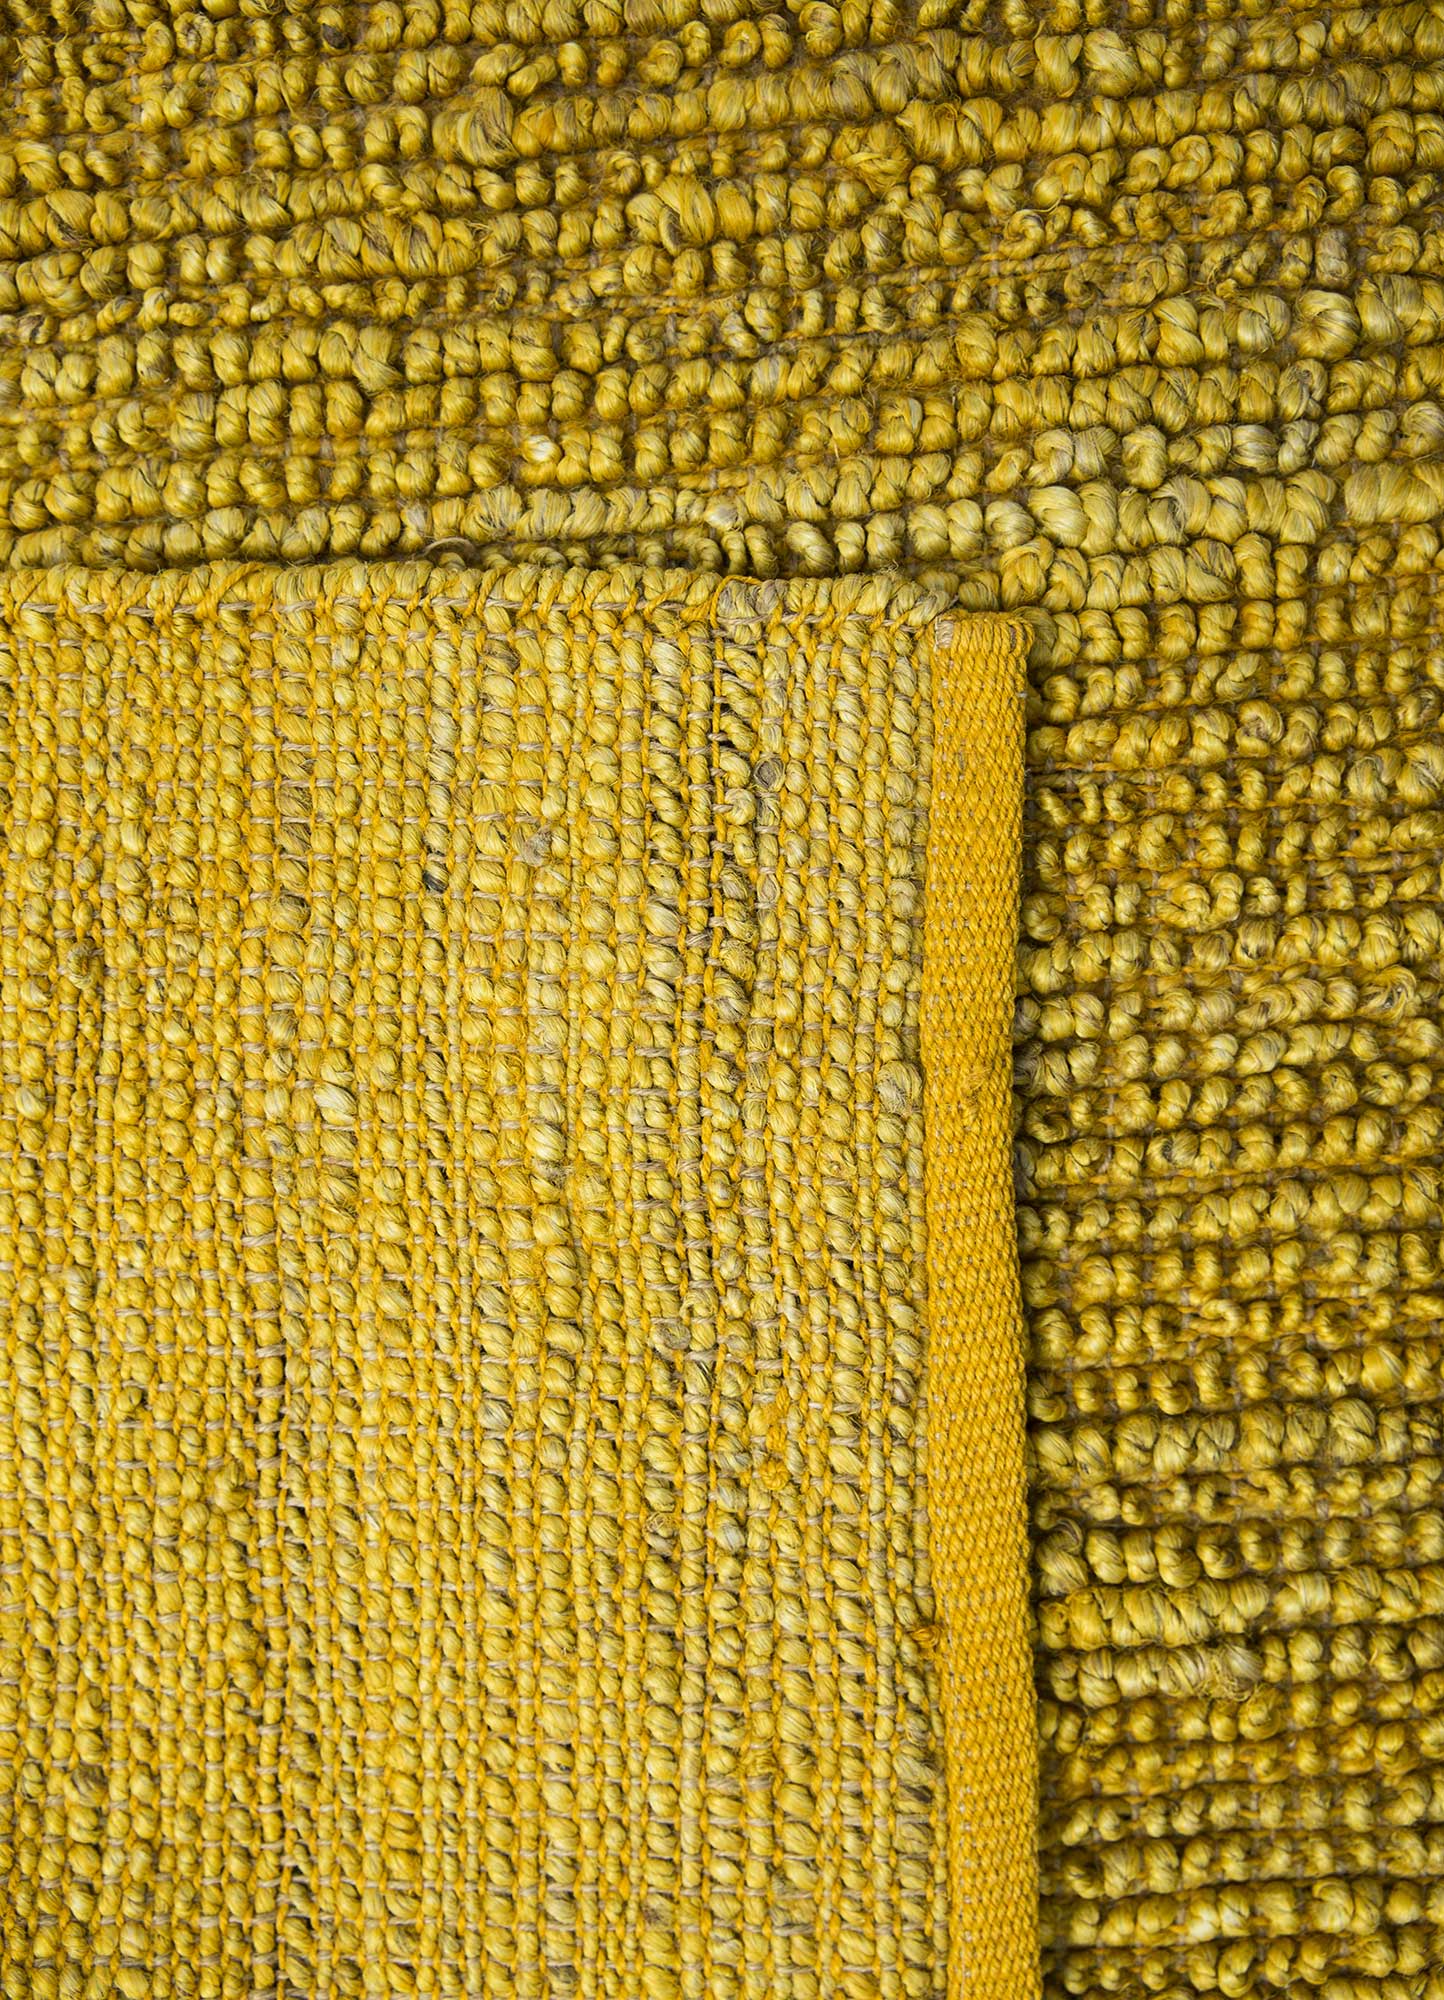 abrash gold jute and hemp flat weaves Rug - Perspective